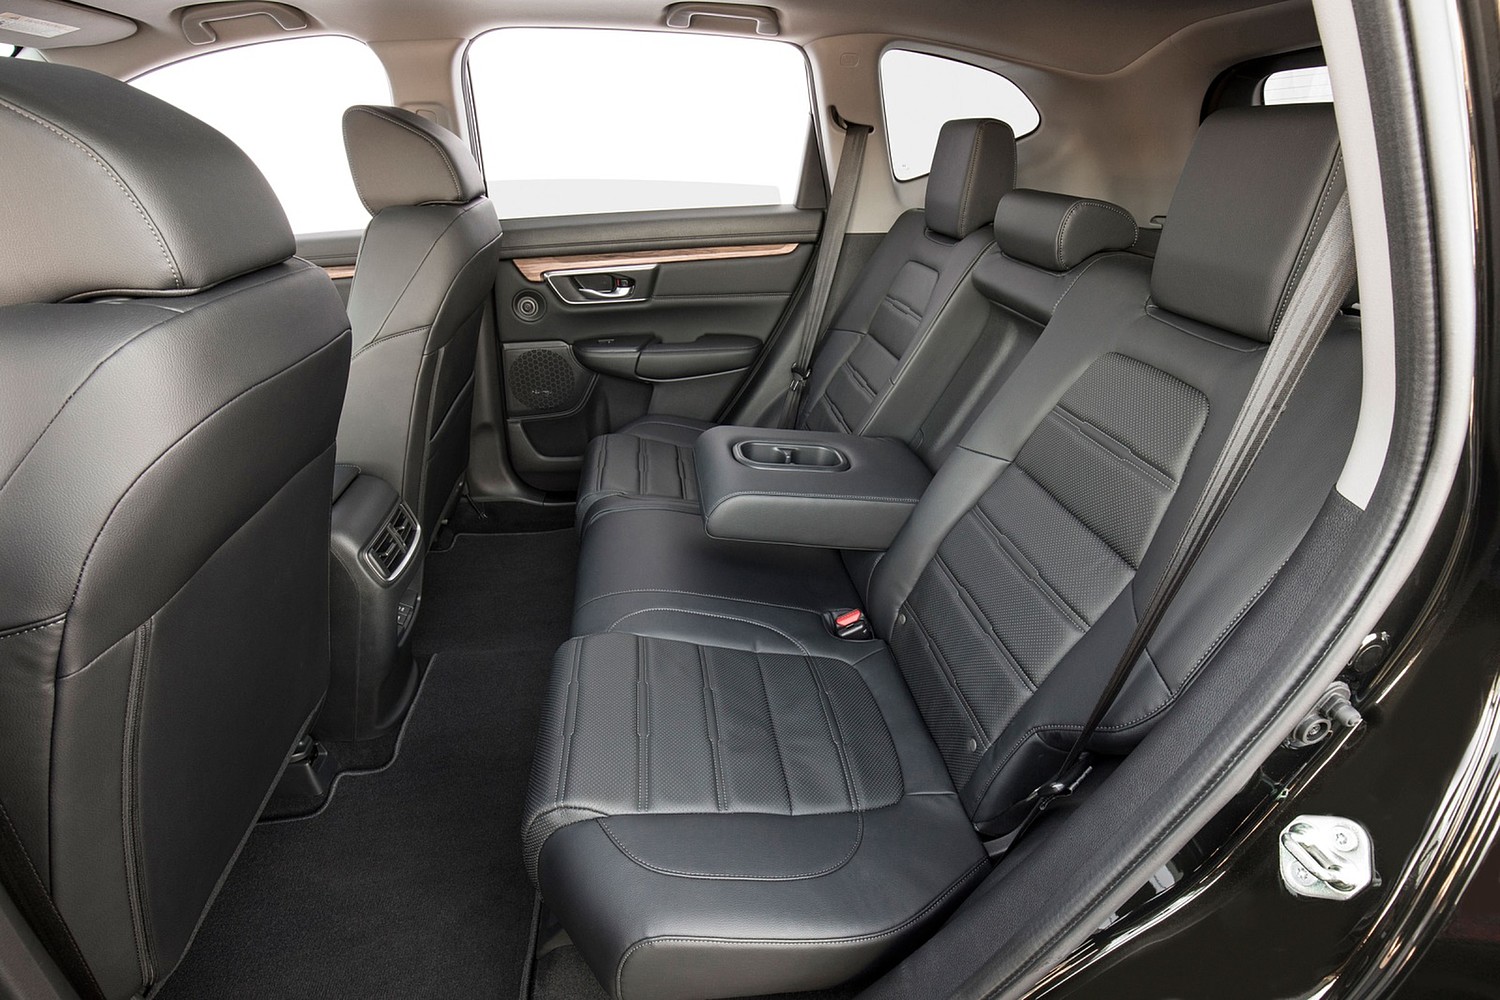 Honda CR-V Touring 4dr SUV Rear Interior (2017 model year shown)